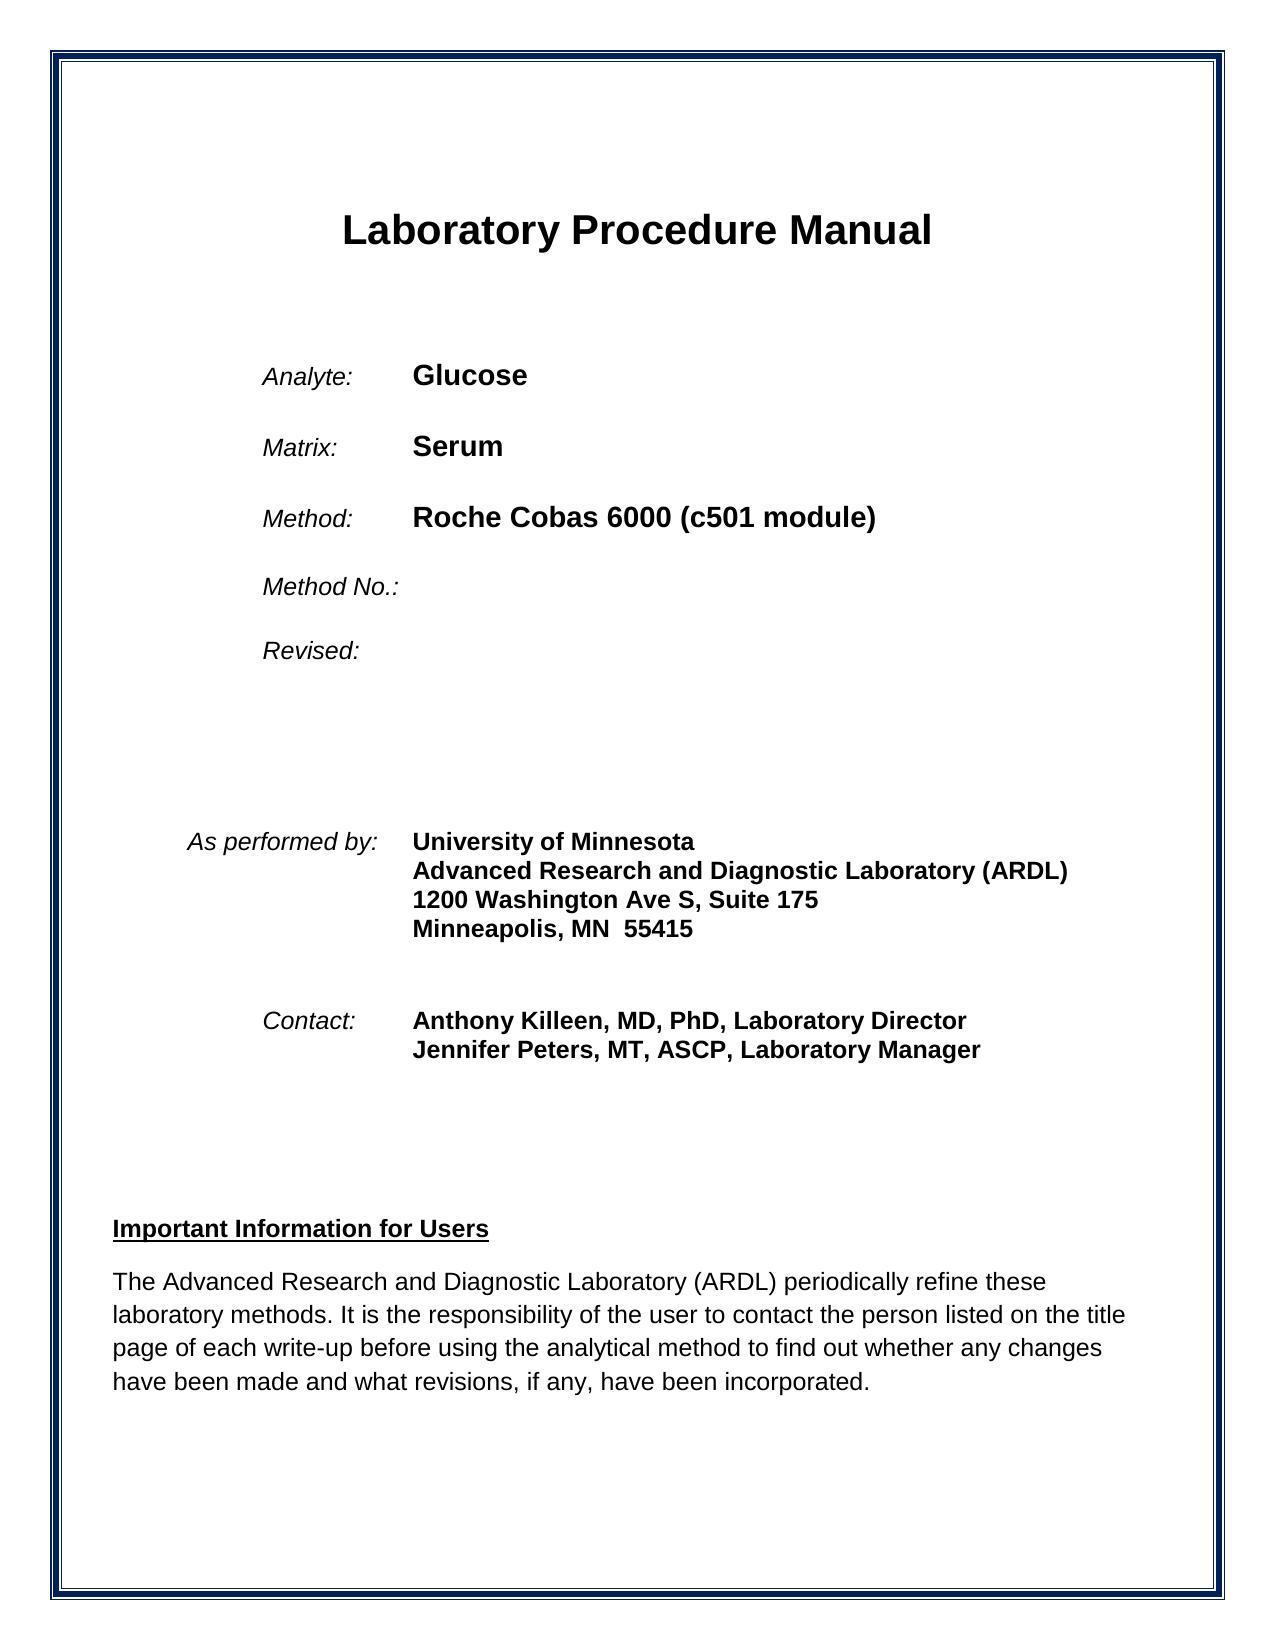 laboratory-procedure-manual-for-roche-cobas-6000-c501-module-glucose-method.pdf